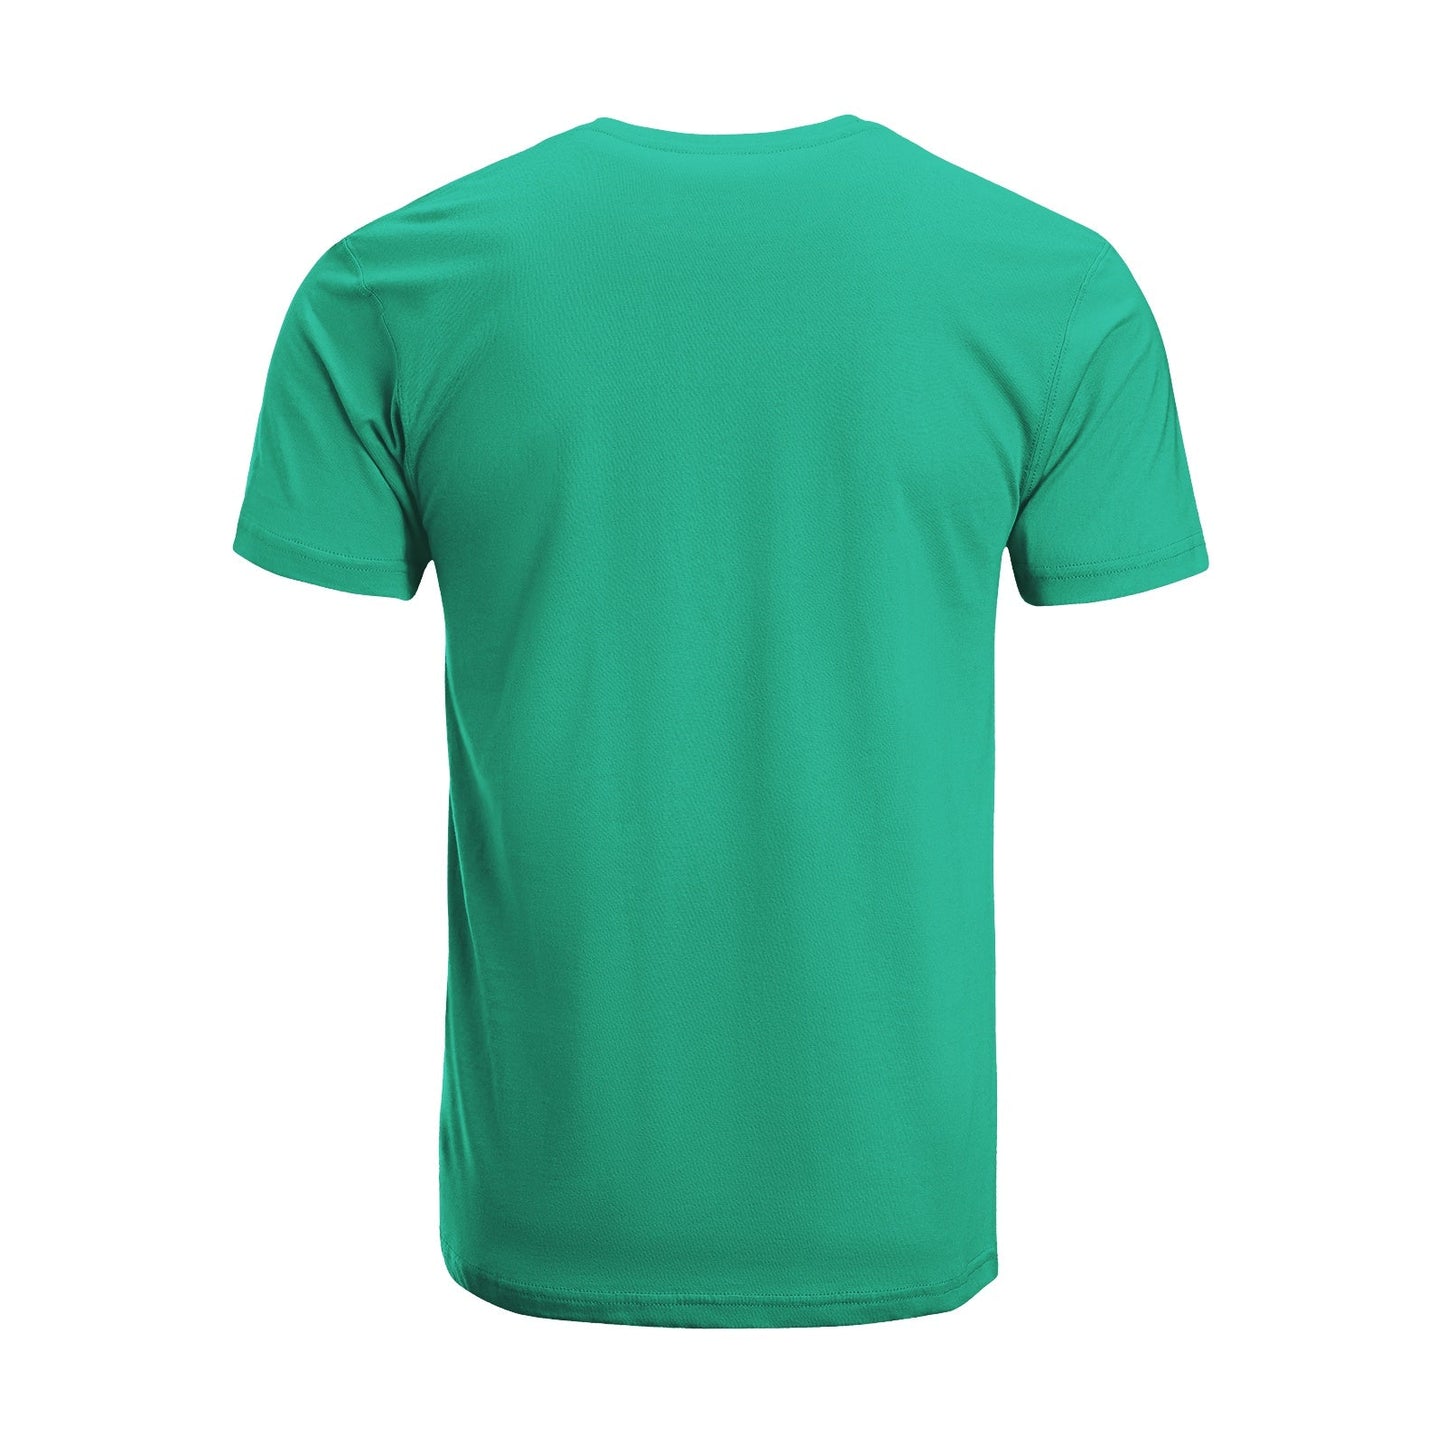 Unisex Short Sleeve Crew Neck Cotton Jersey T-Shirt CAT 48 - Tara-Outfits.com